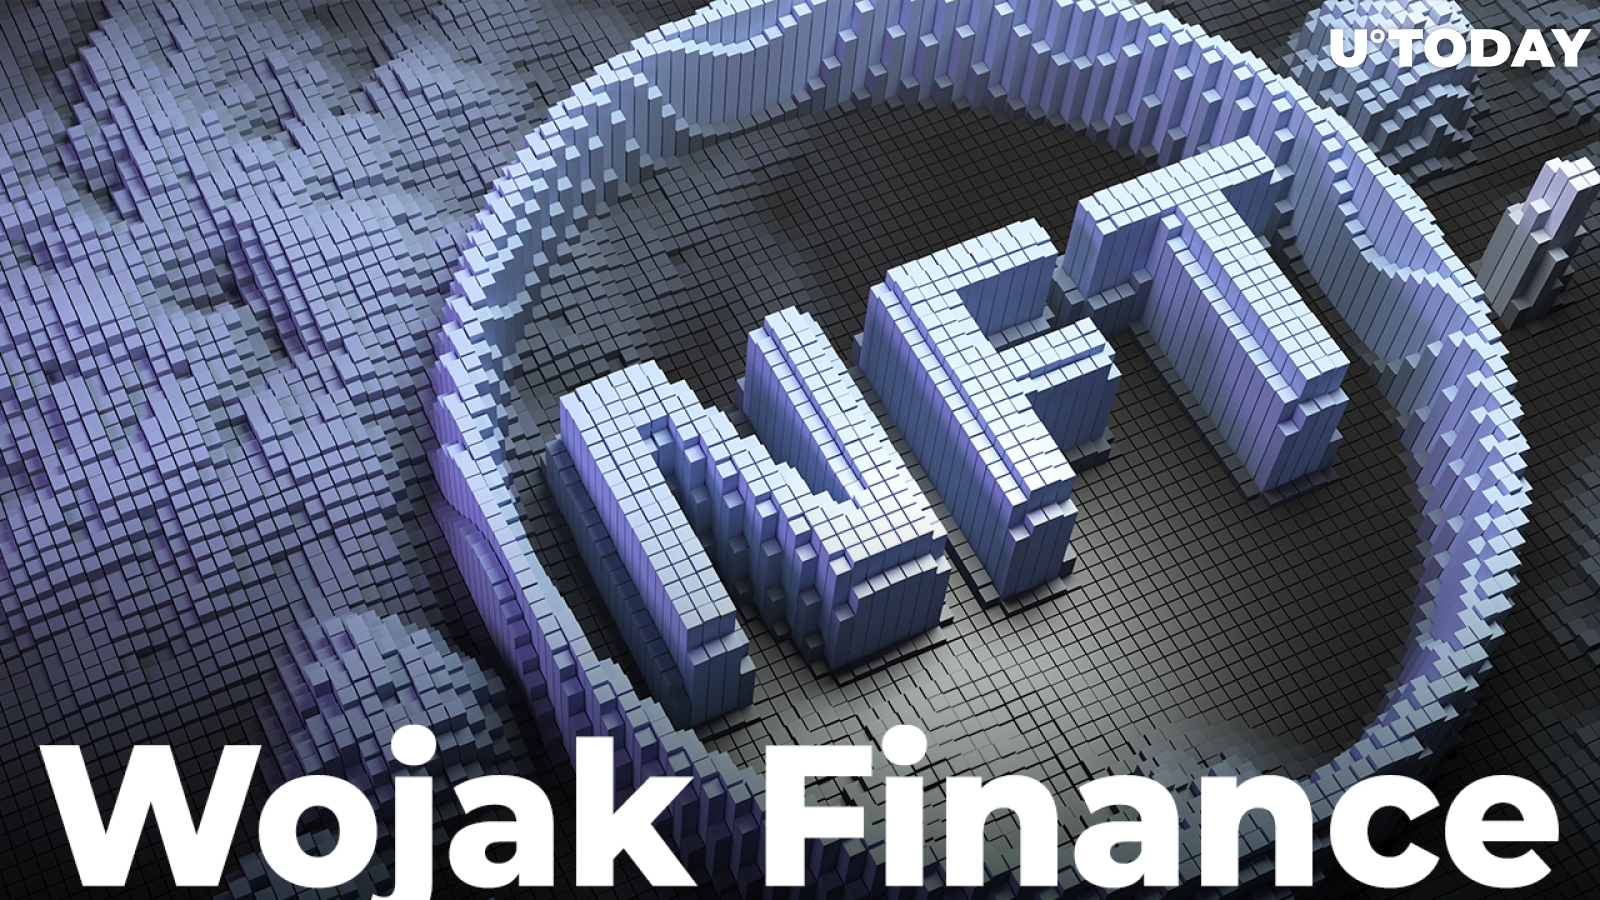 Wojak Finance DeFi Shares Details of Its NFT Program